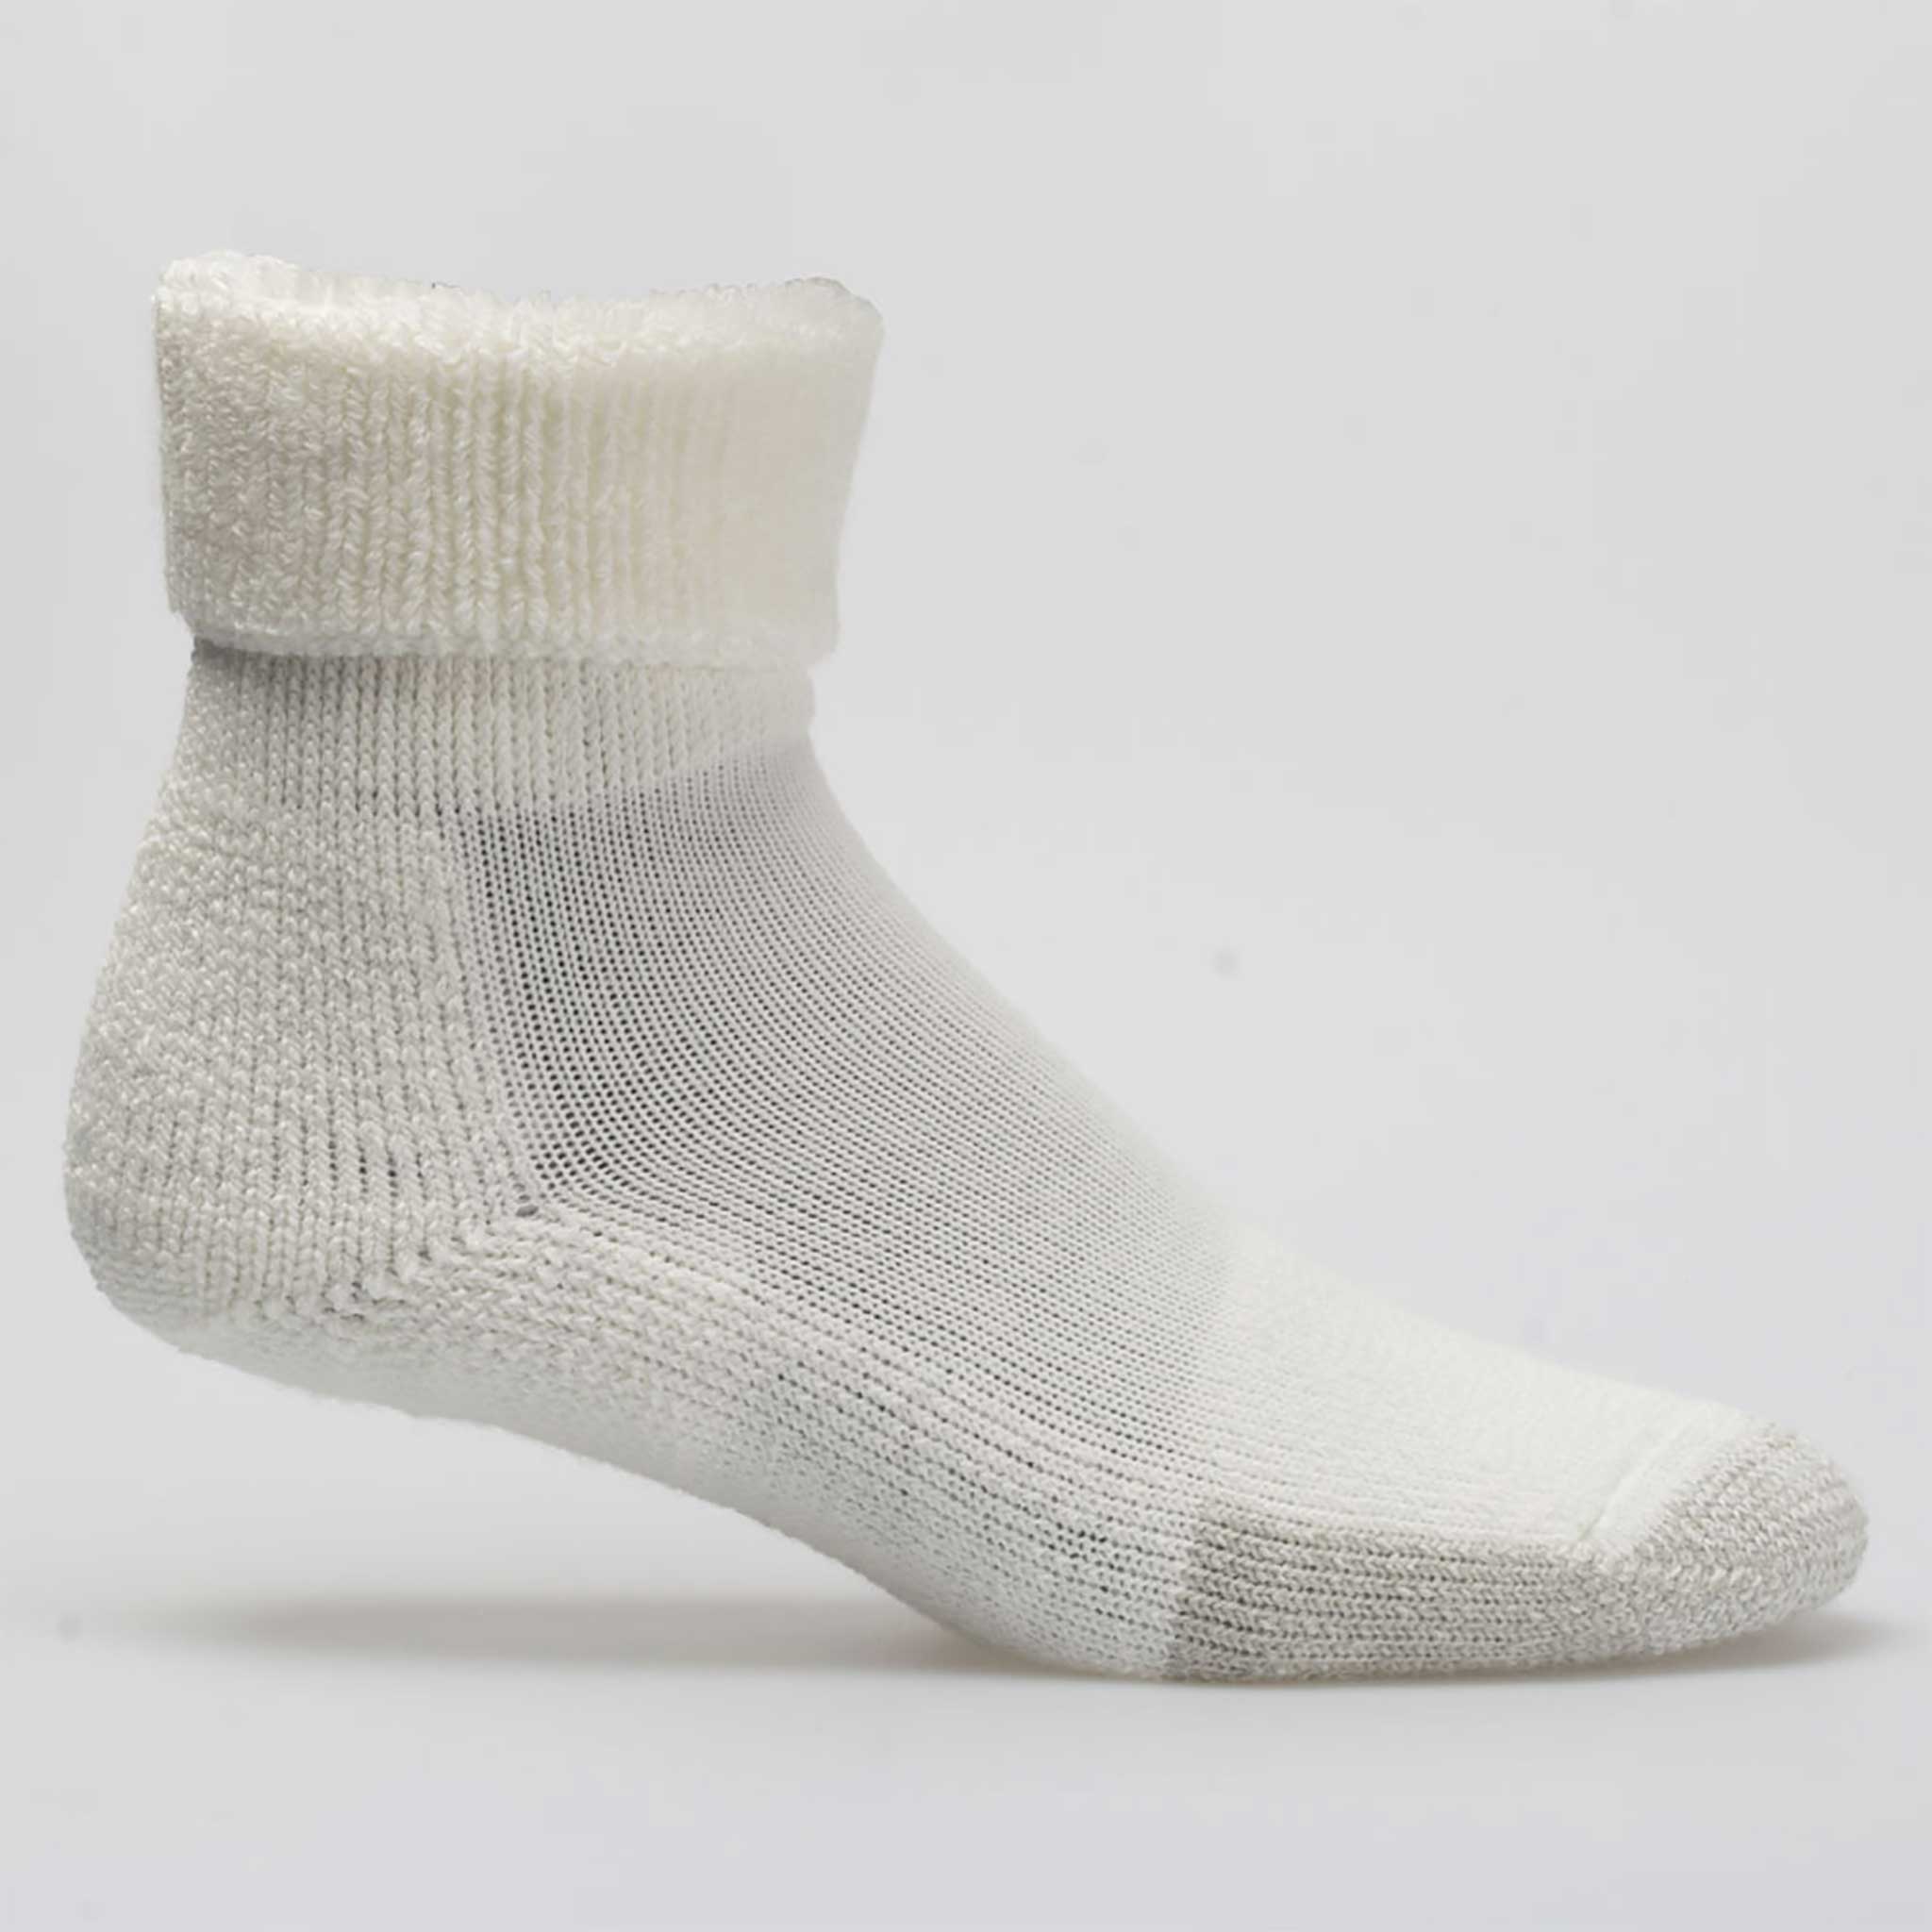 Thorlo Maximum Cushion Cuff Top Tennis Socks